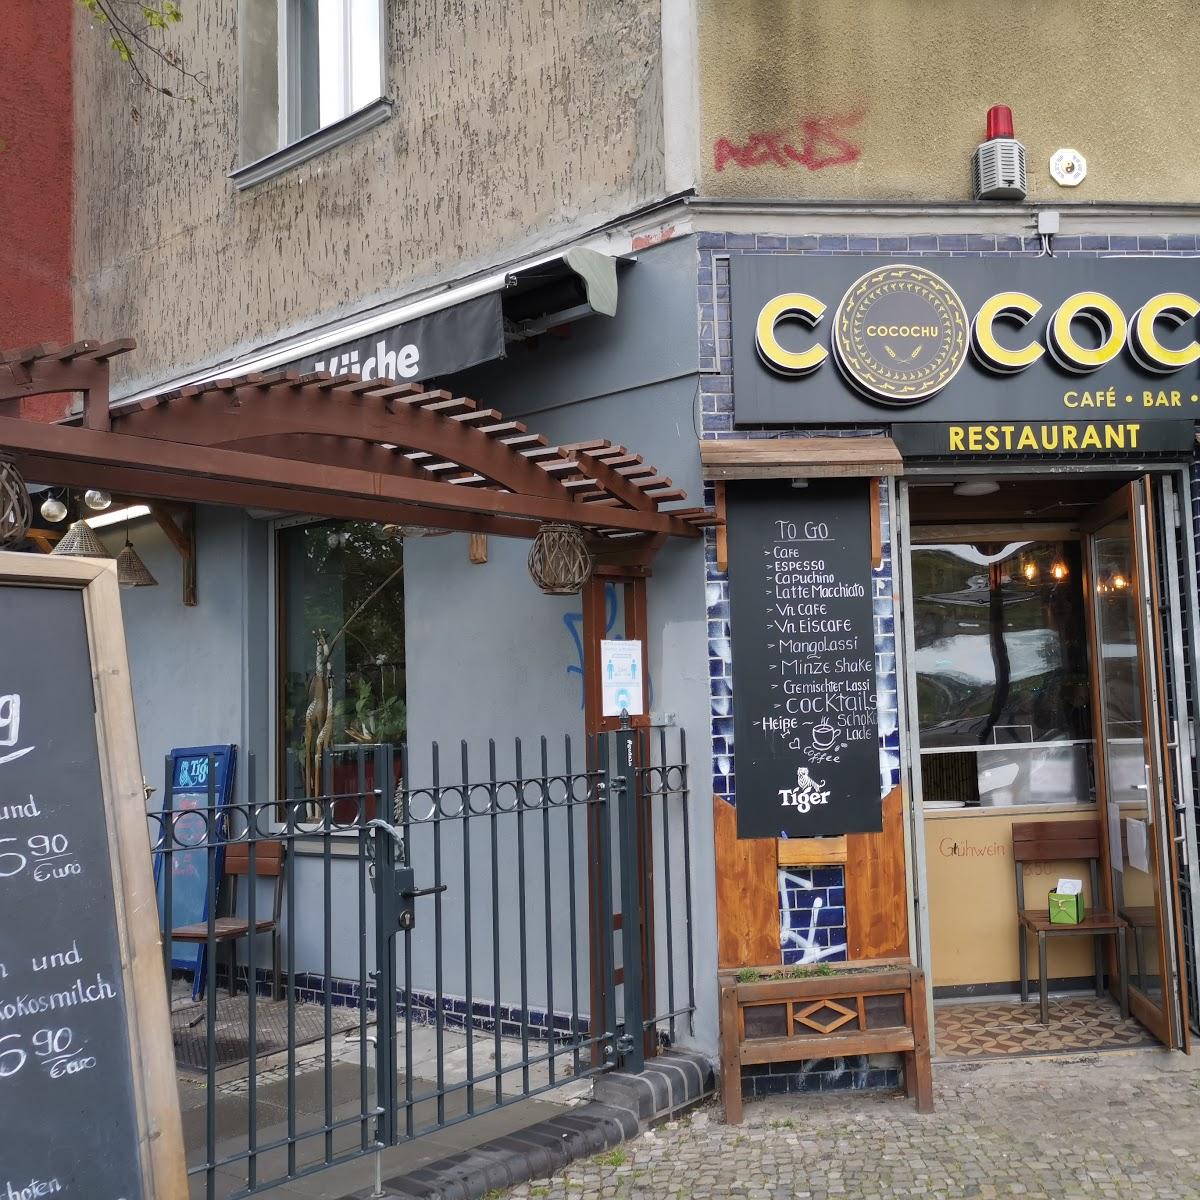 Restaurant "Cocochu" in Berlin